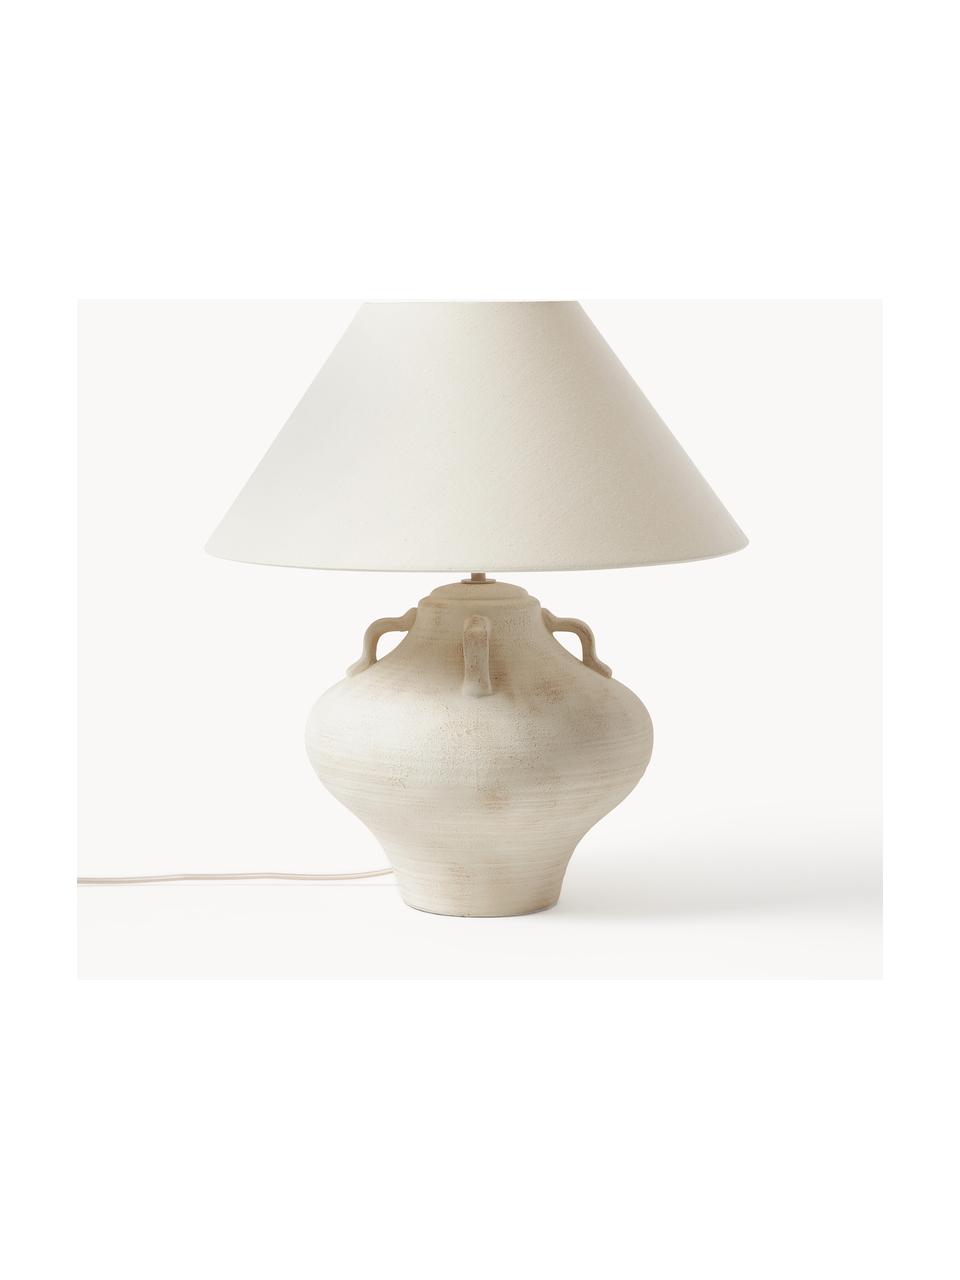 Grote keramische tafellamp Taytum, Lampenkap: linnen, Gebroken wit, lichtbeige, Ø 46 x H 51 cm